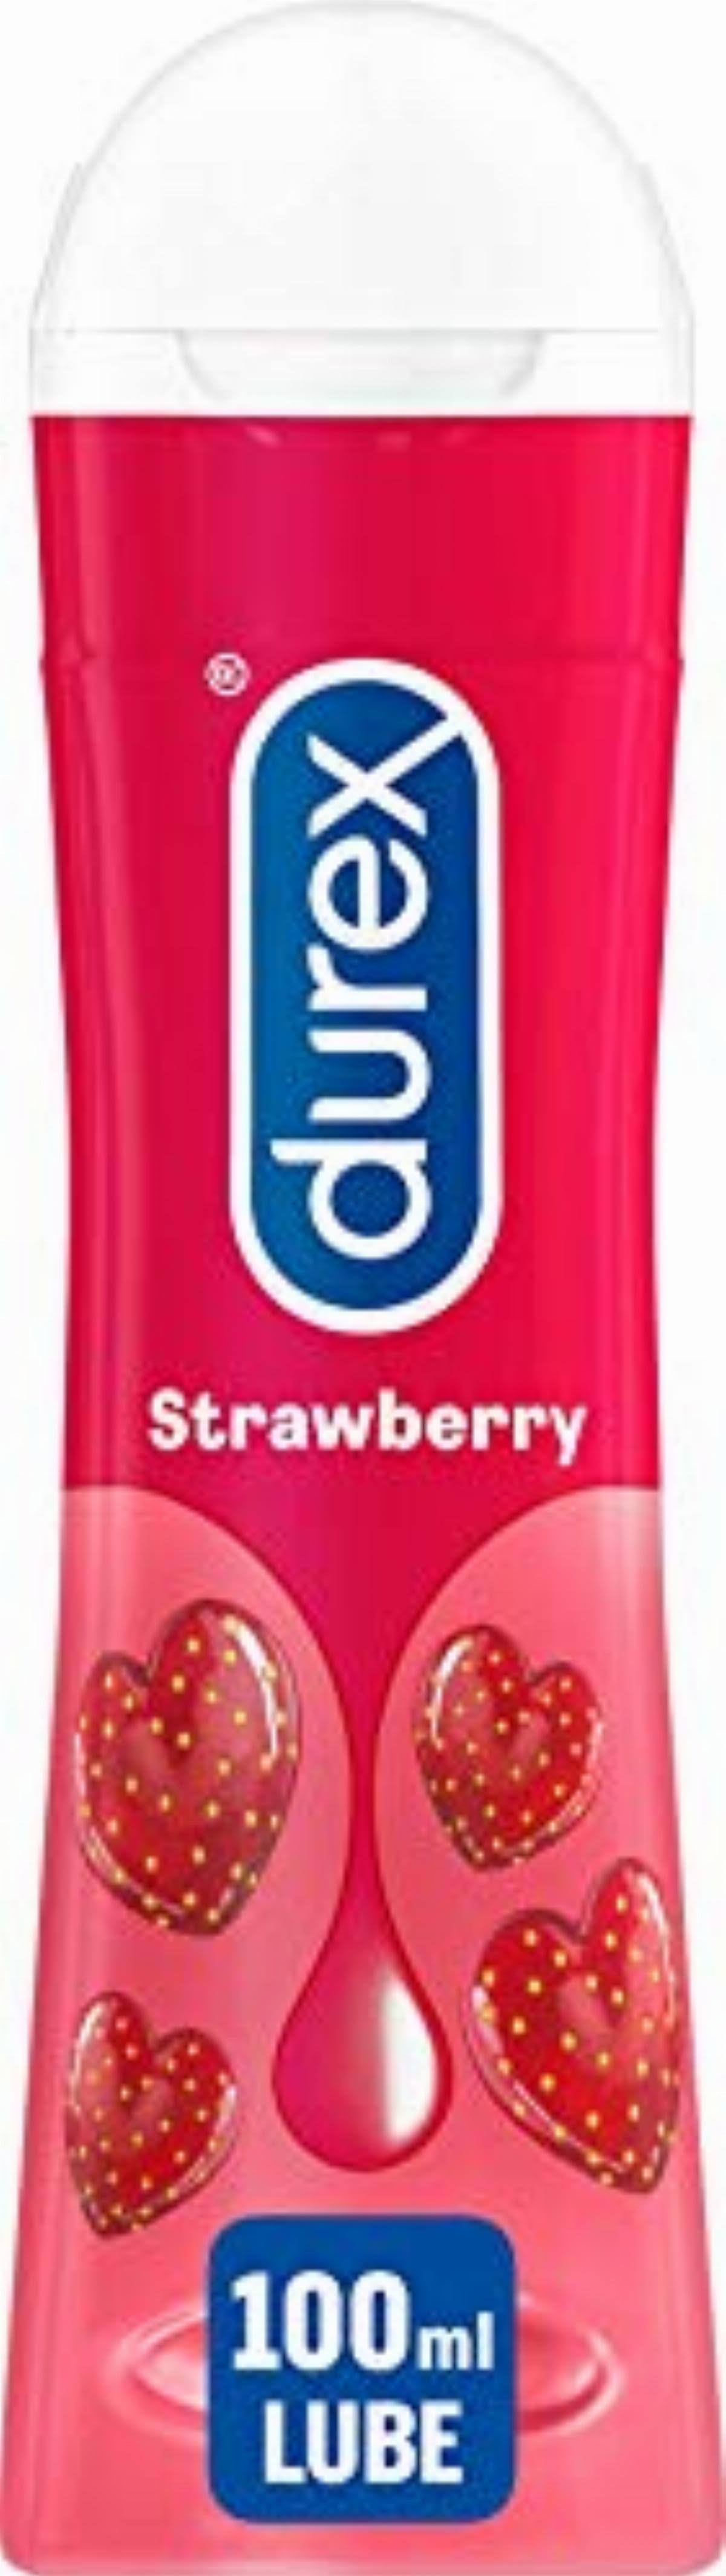 Durex Strawberry Lube Intimate Gel, Water Based, 100 ml